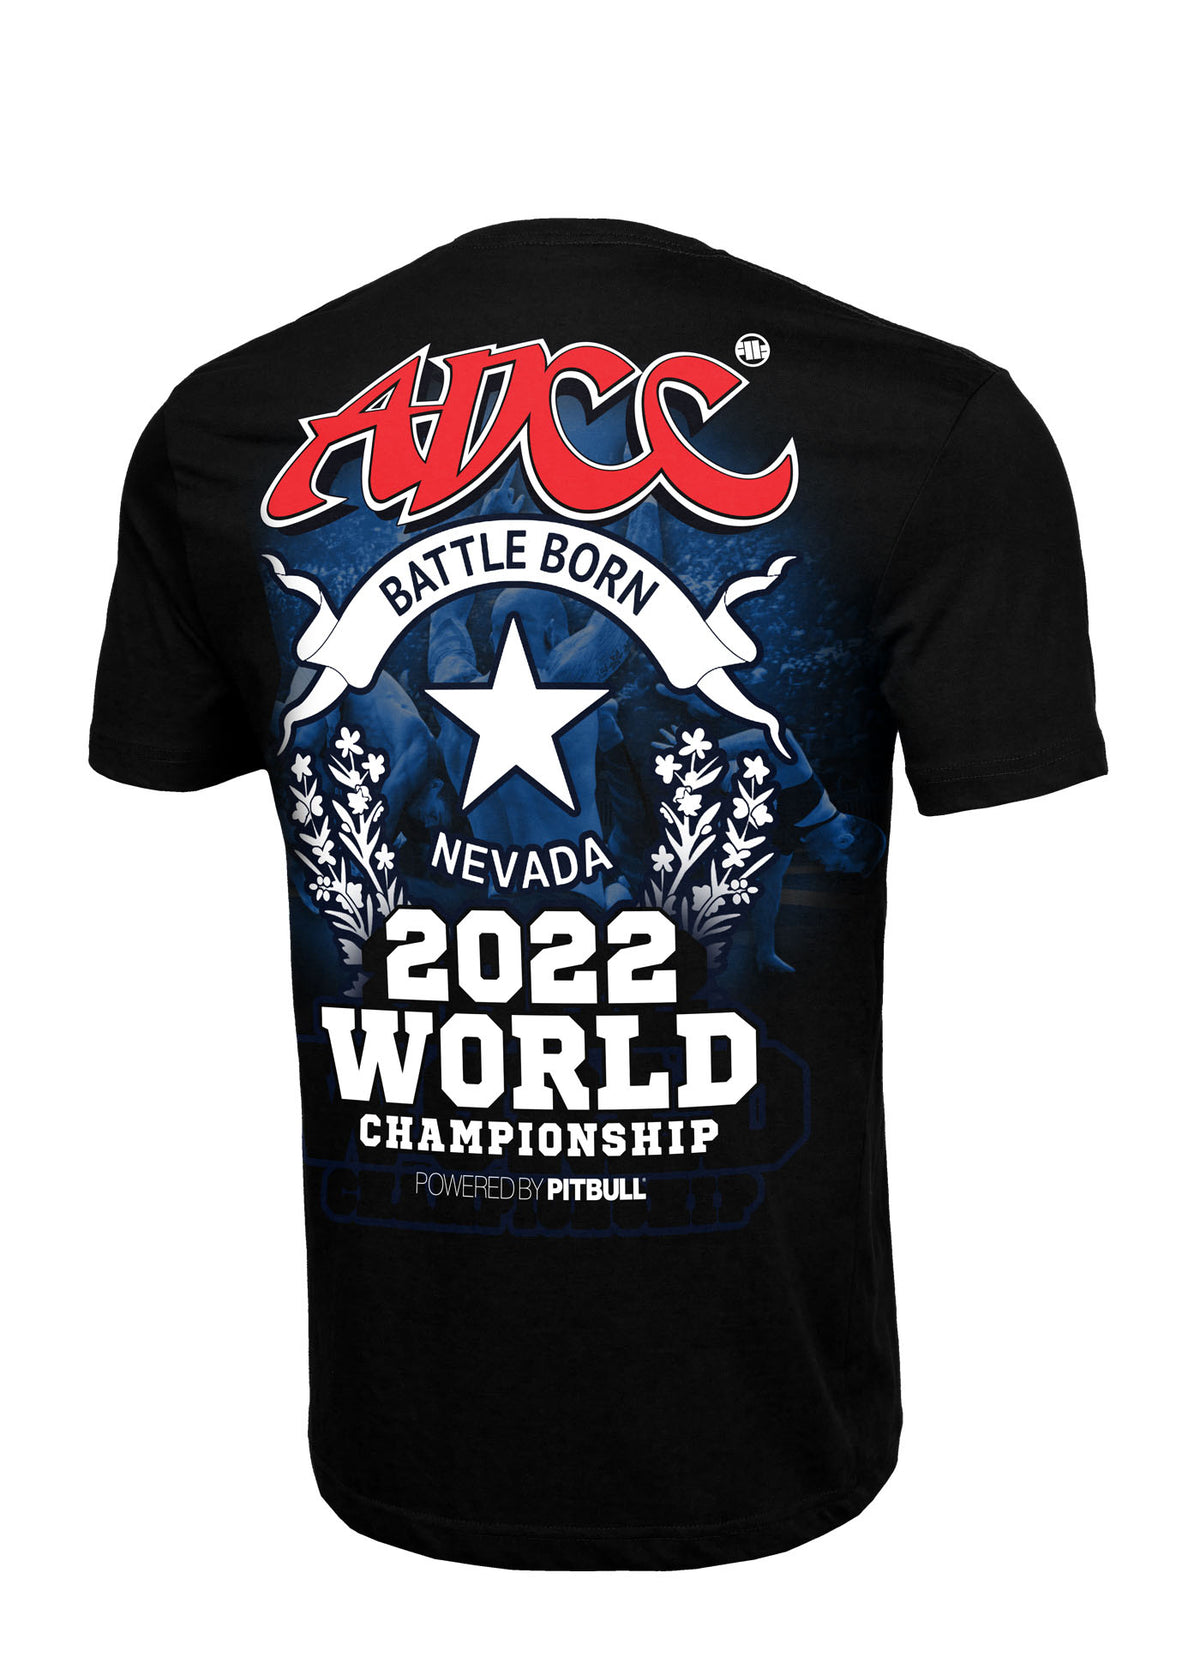 ADCC CHAMPIONSHIP 2022 NEVADA Black T-shirt - Pitbull West Coast International Store 